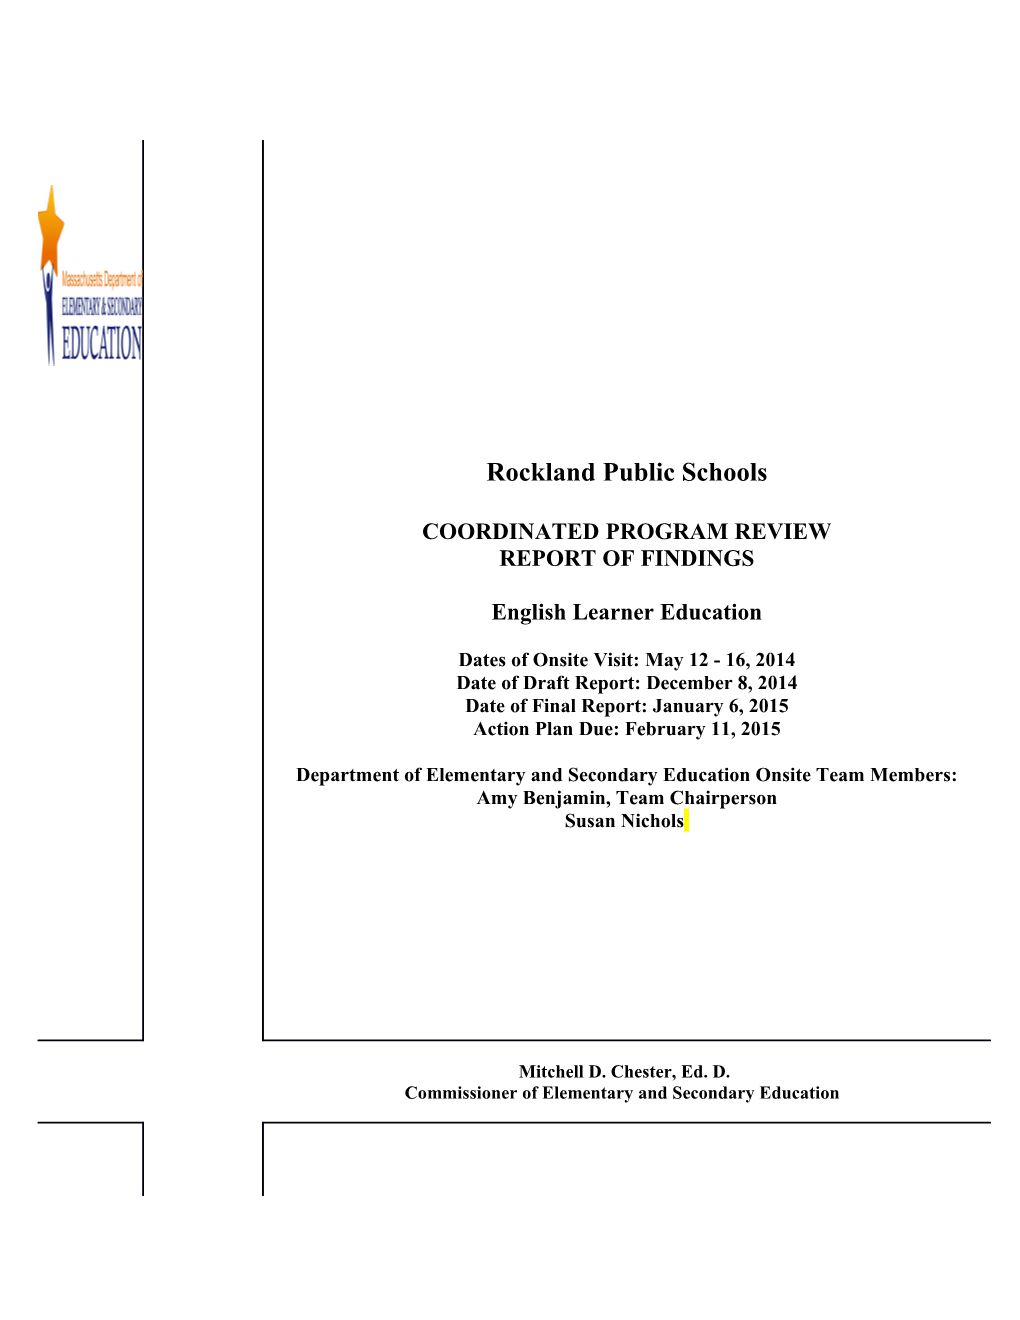 Rockland Public School CPR Final Report 2013-14